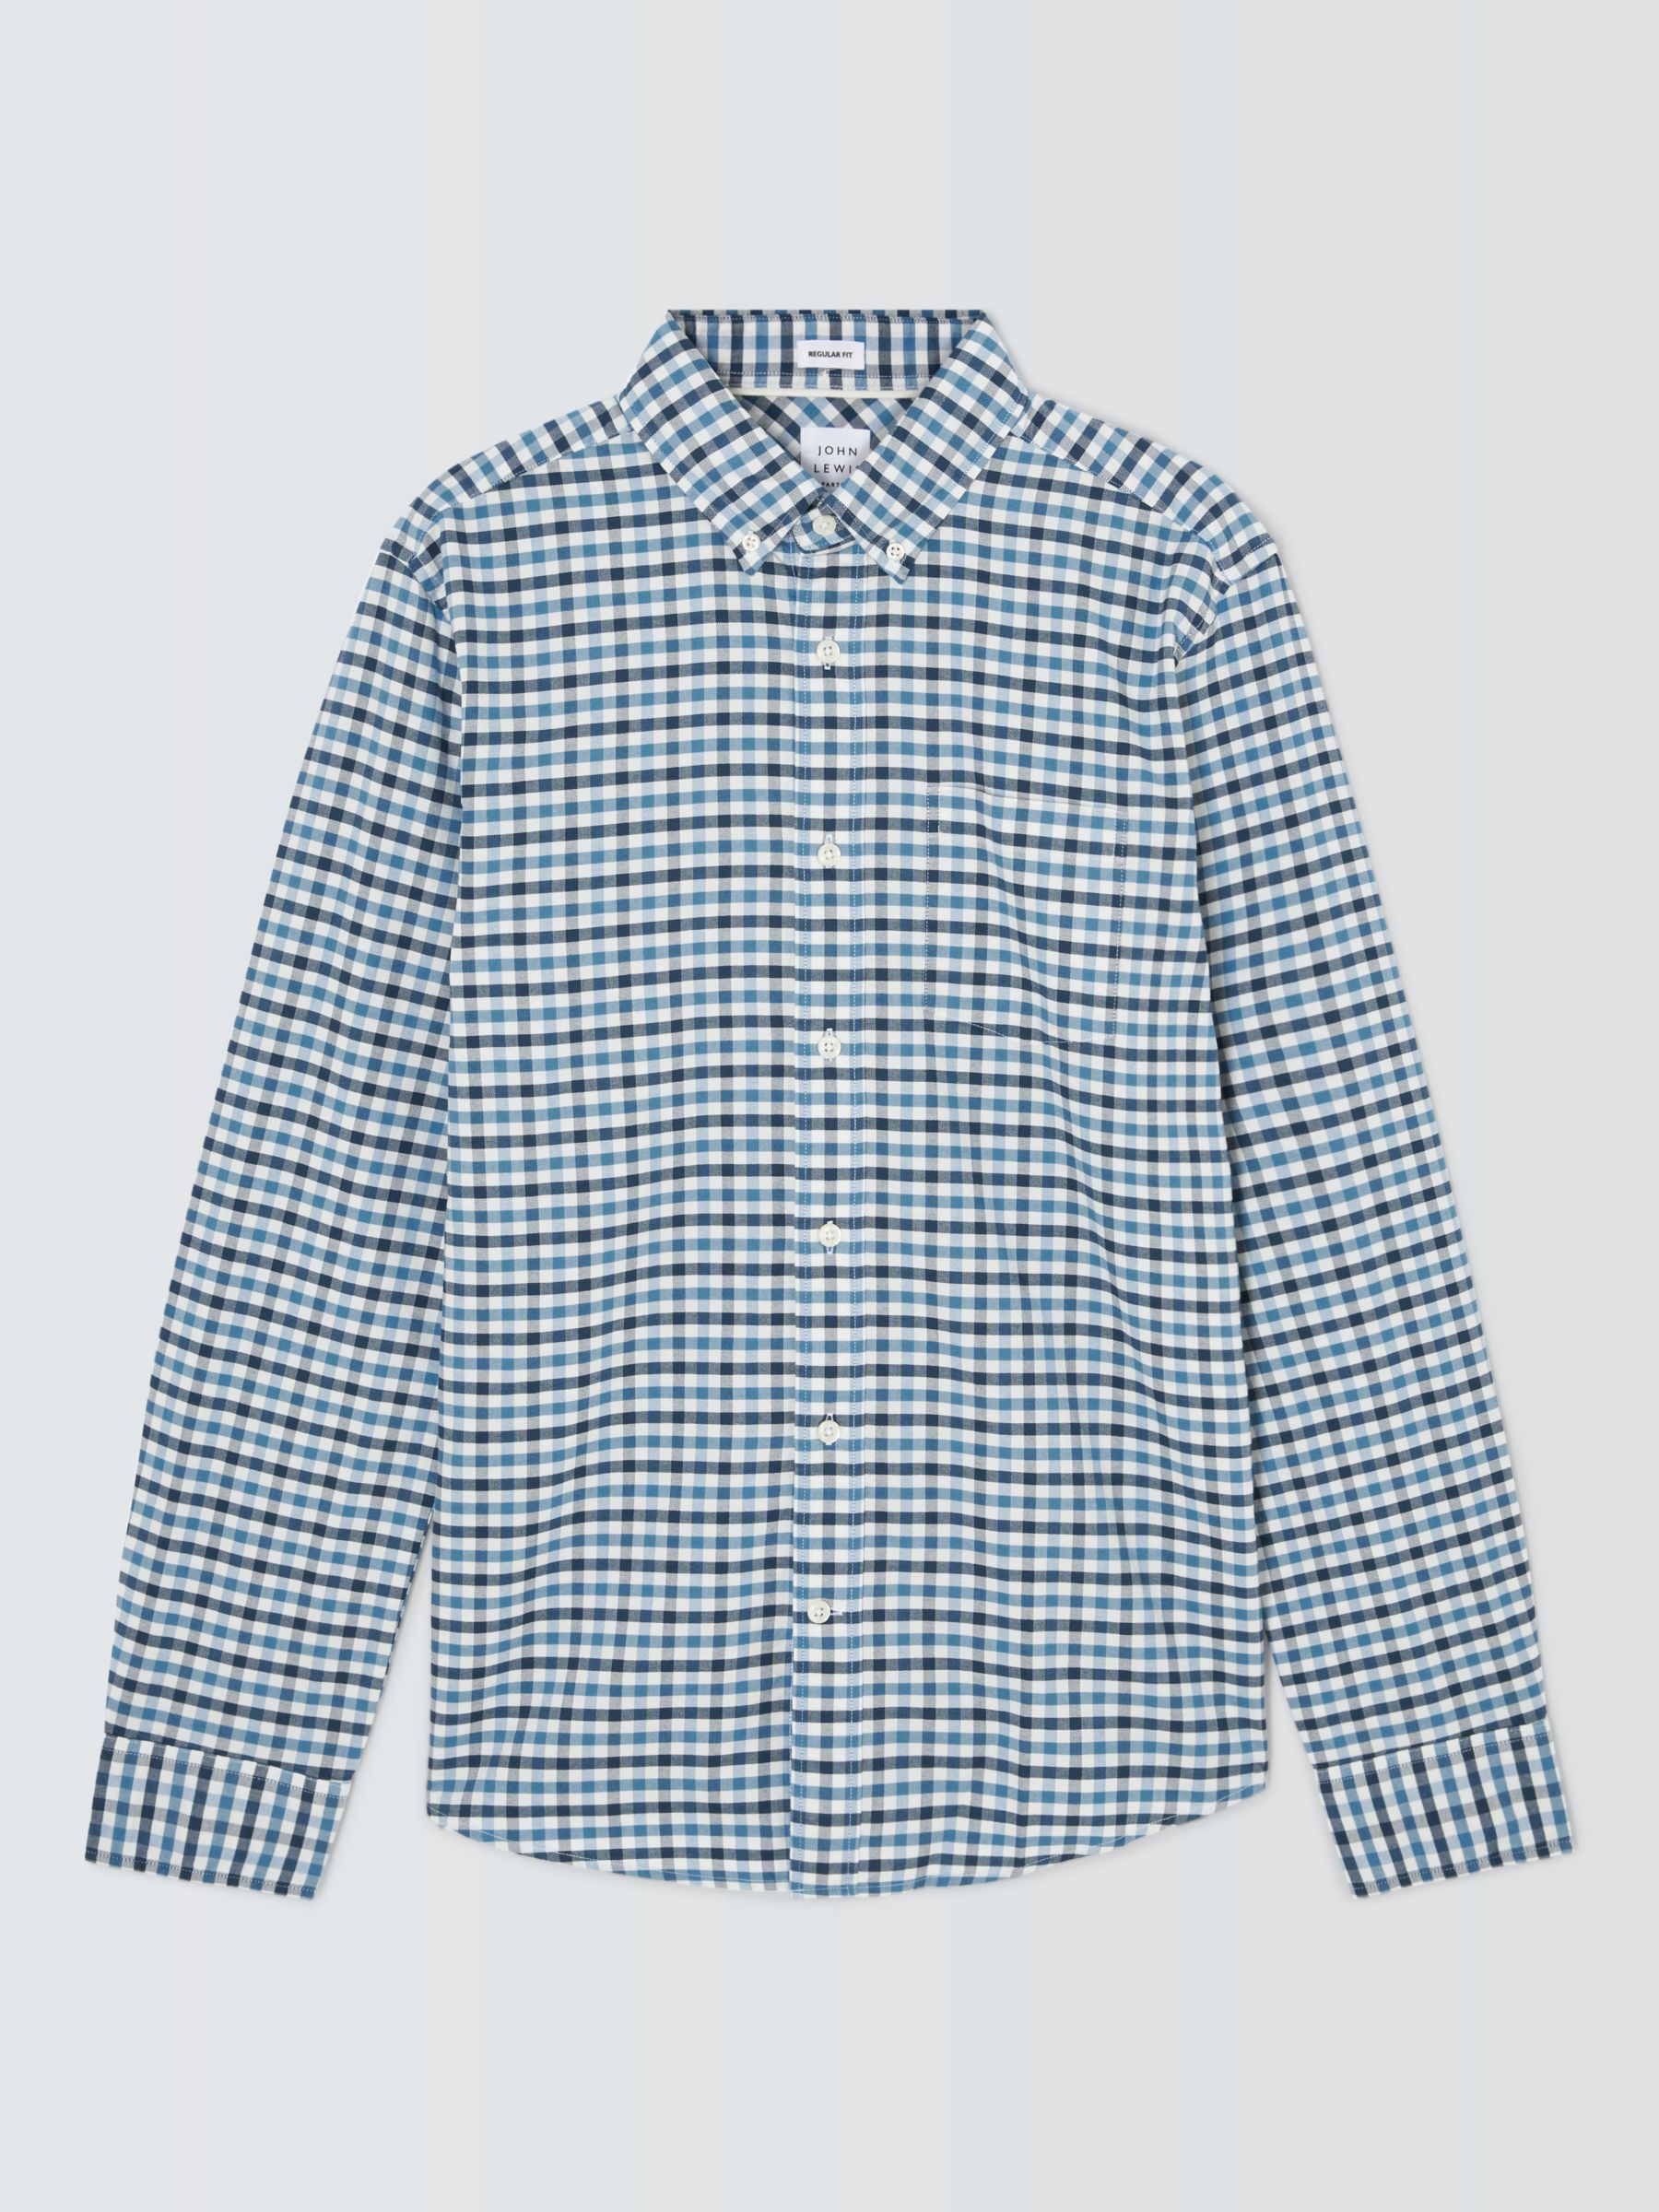 John Lewis Oxford Gingham Long Sleeve Shirt, Blue, L